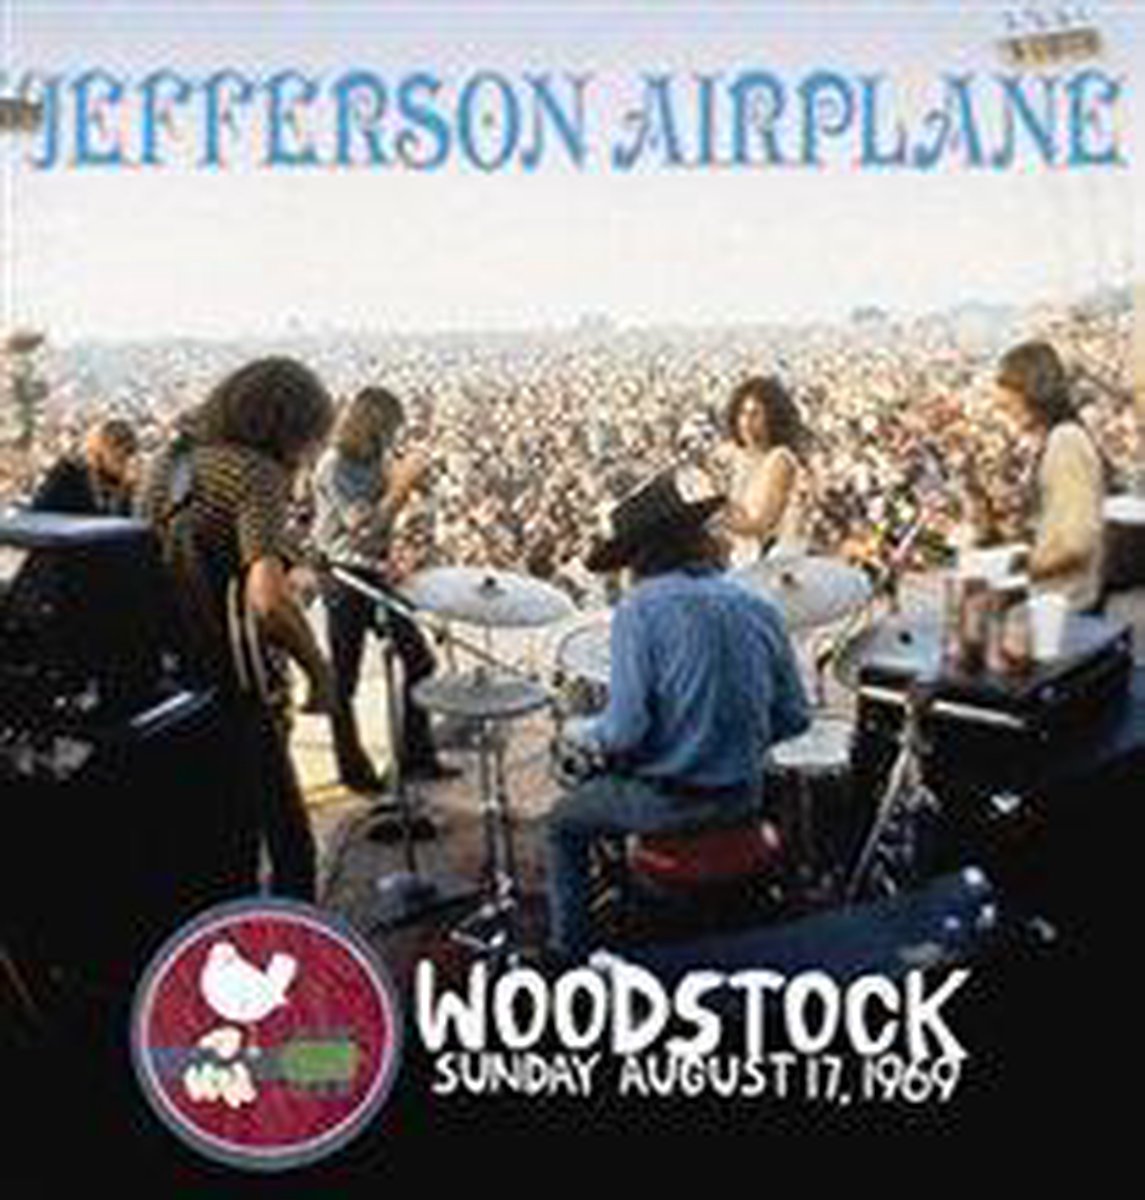 Woodstock Experience - Jefferson Airplane